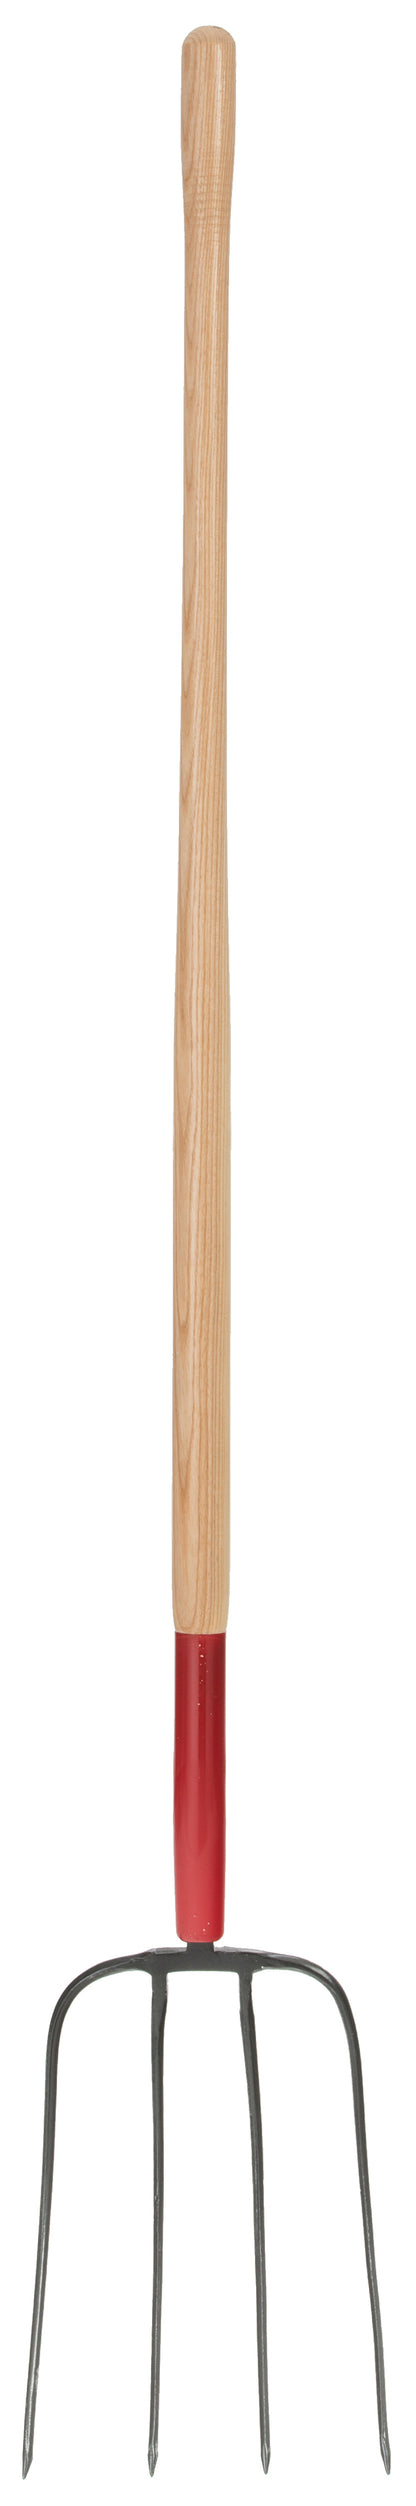 Manure fork, 4 tines/13", wood handle, lh, Garant